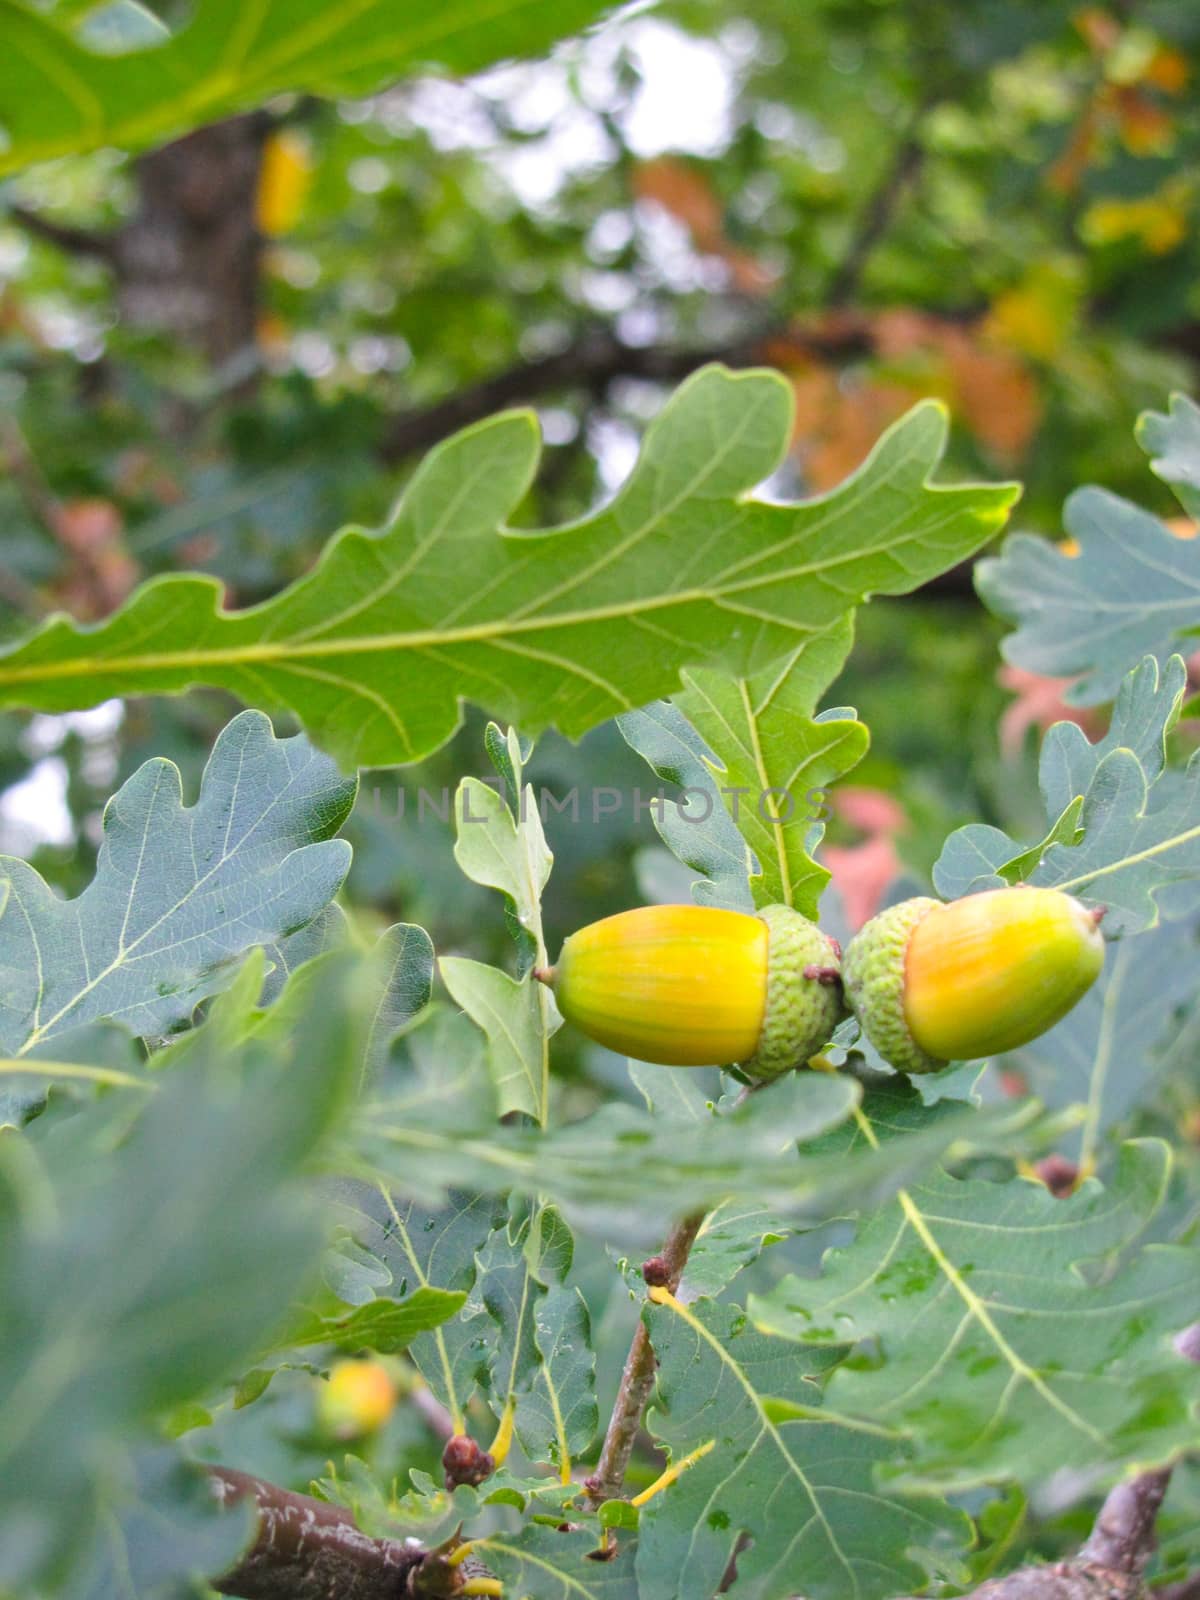 acorns on a branch by rodakm